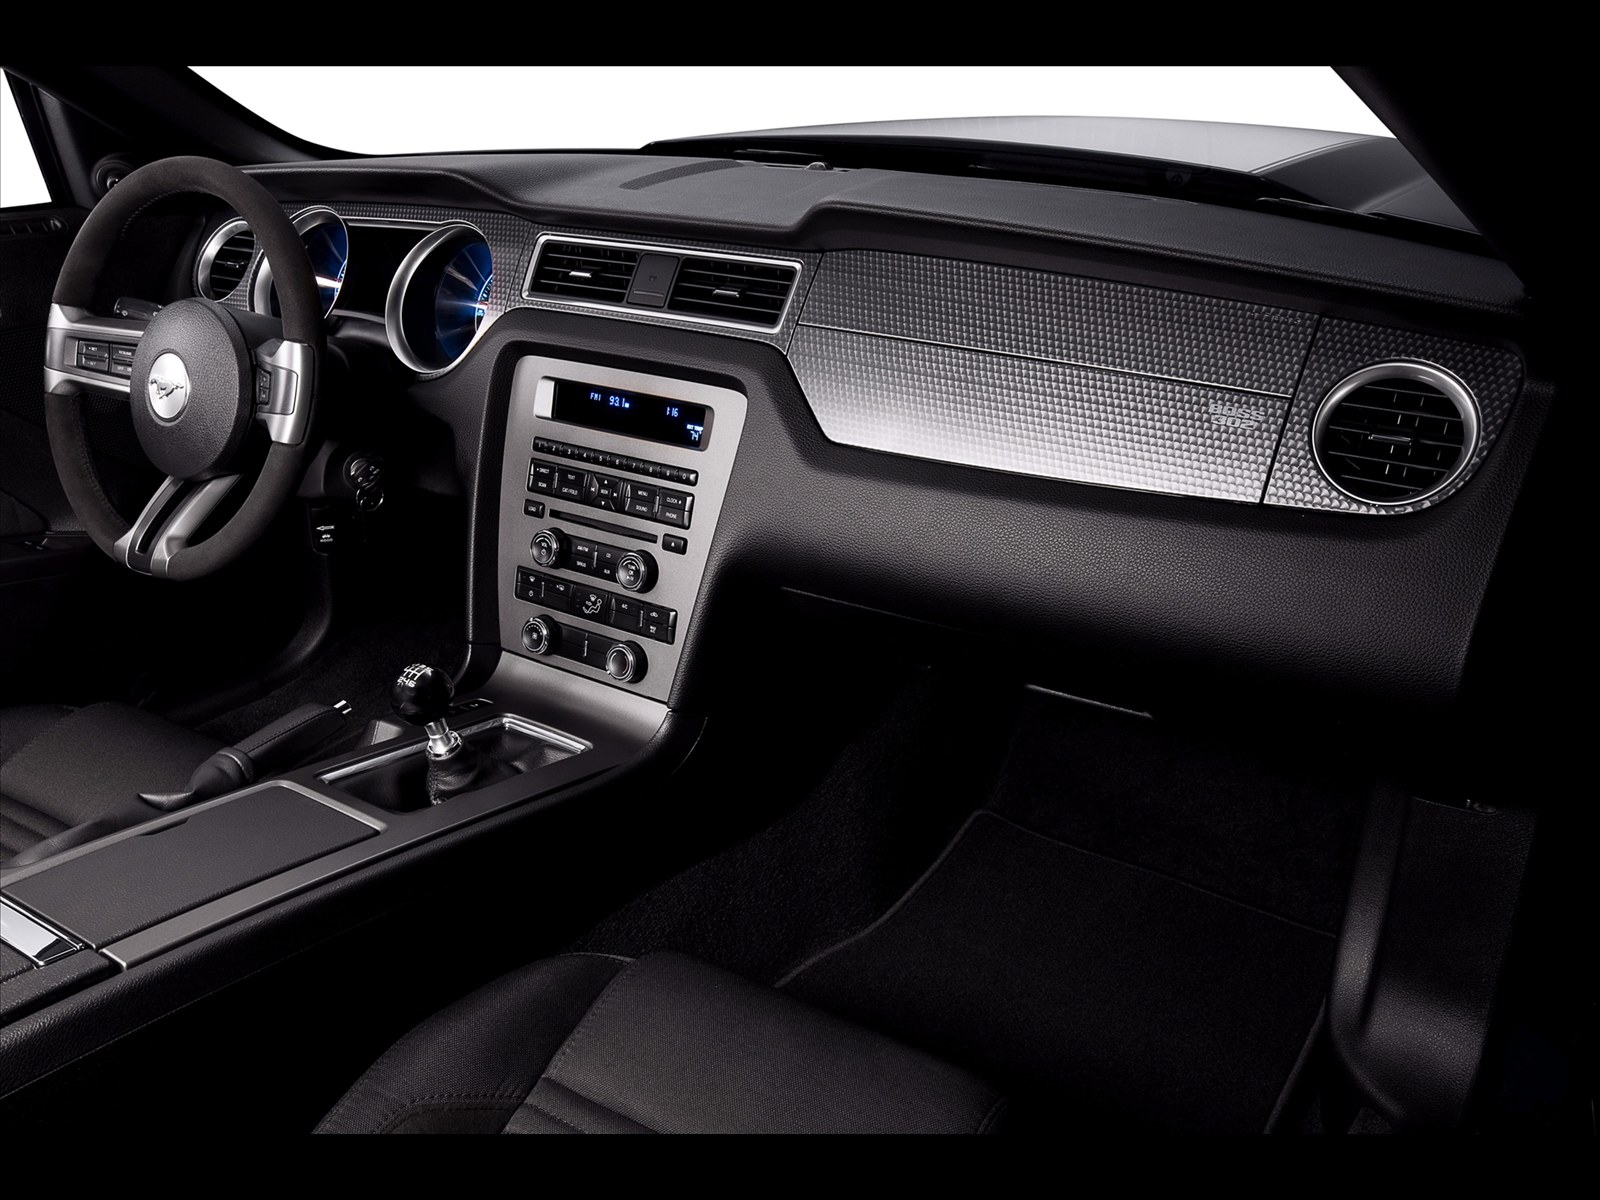 2012 Ford Mustang Boss 302 Interior View Topcar 24 7